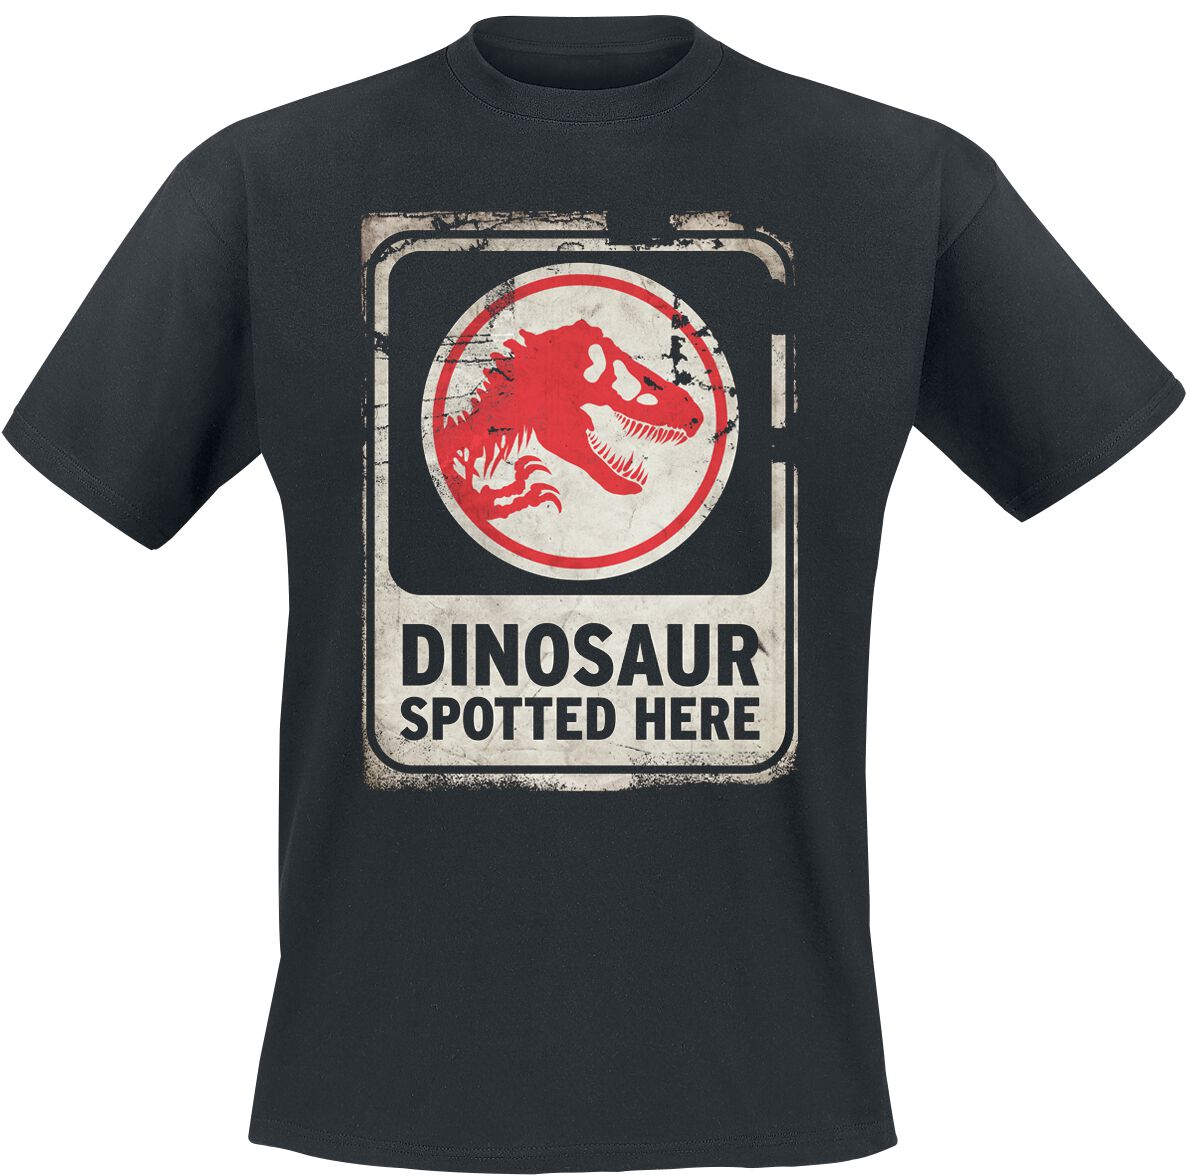 Jurassic Park Jurassic World - Dinosaur Spotted Here T-Shirt black